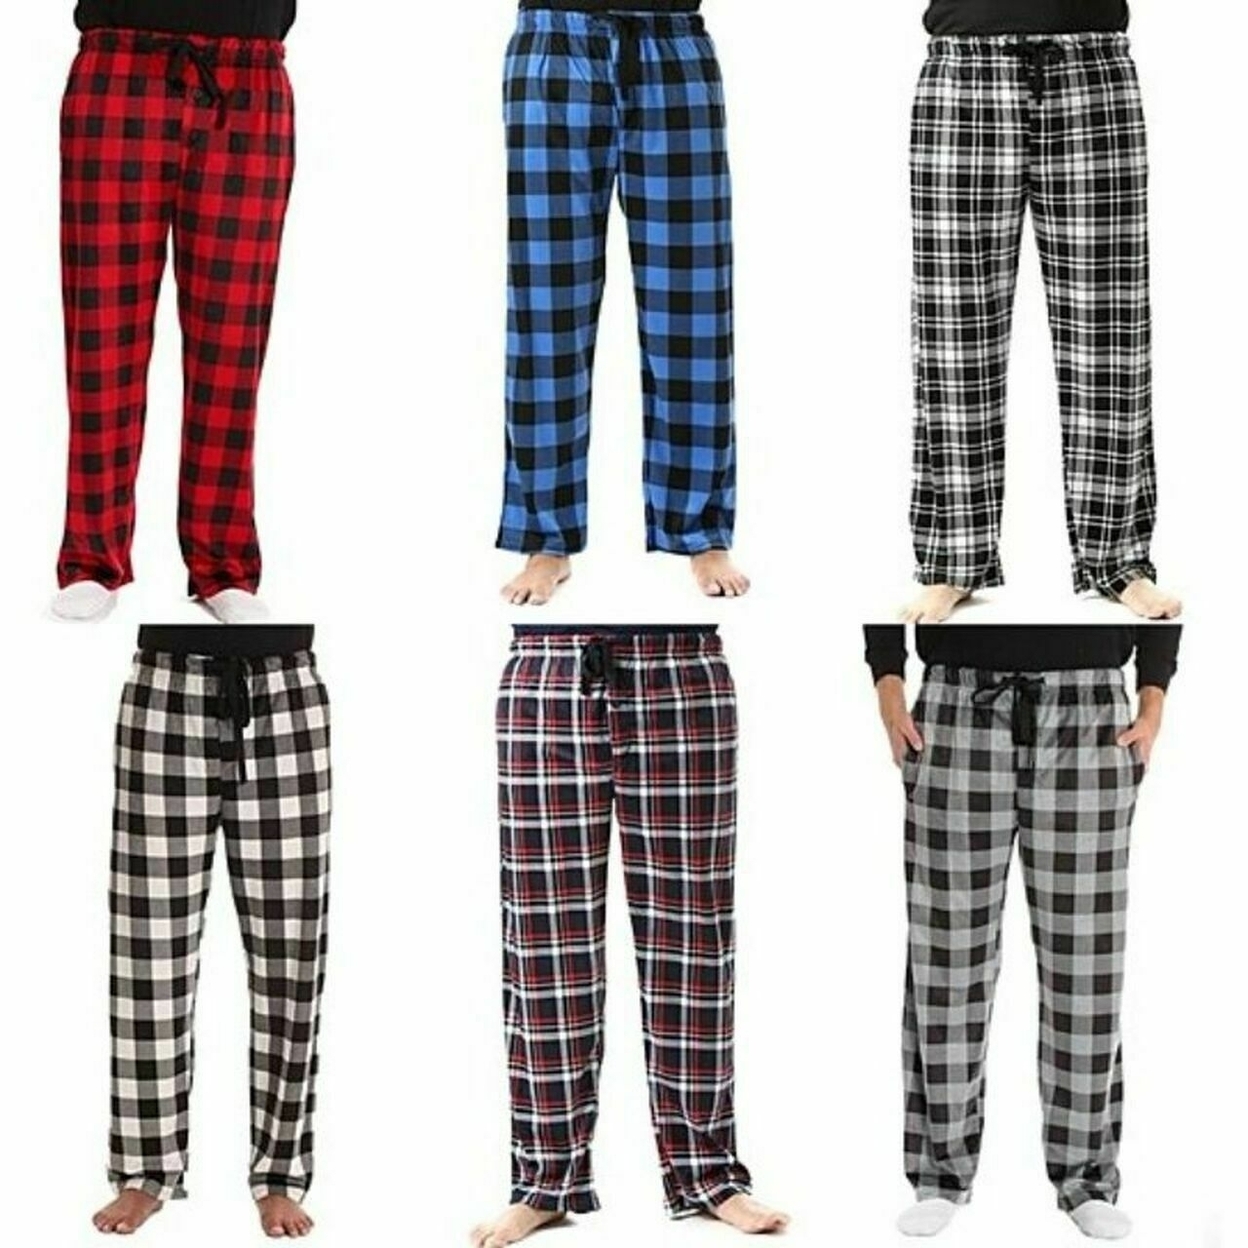 Multi-Pack: Men's Ultra Soft Cozy Flannel Fleece Plaid Pajama Sleep Bottom Lounge Pants - 3-pack, Medium